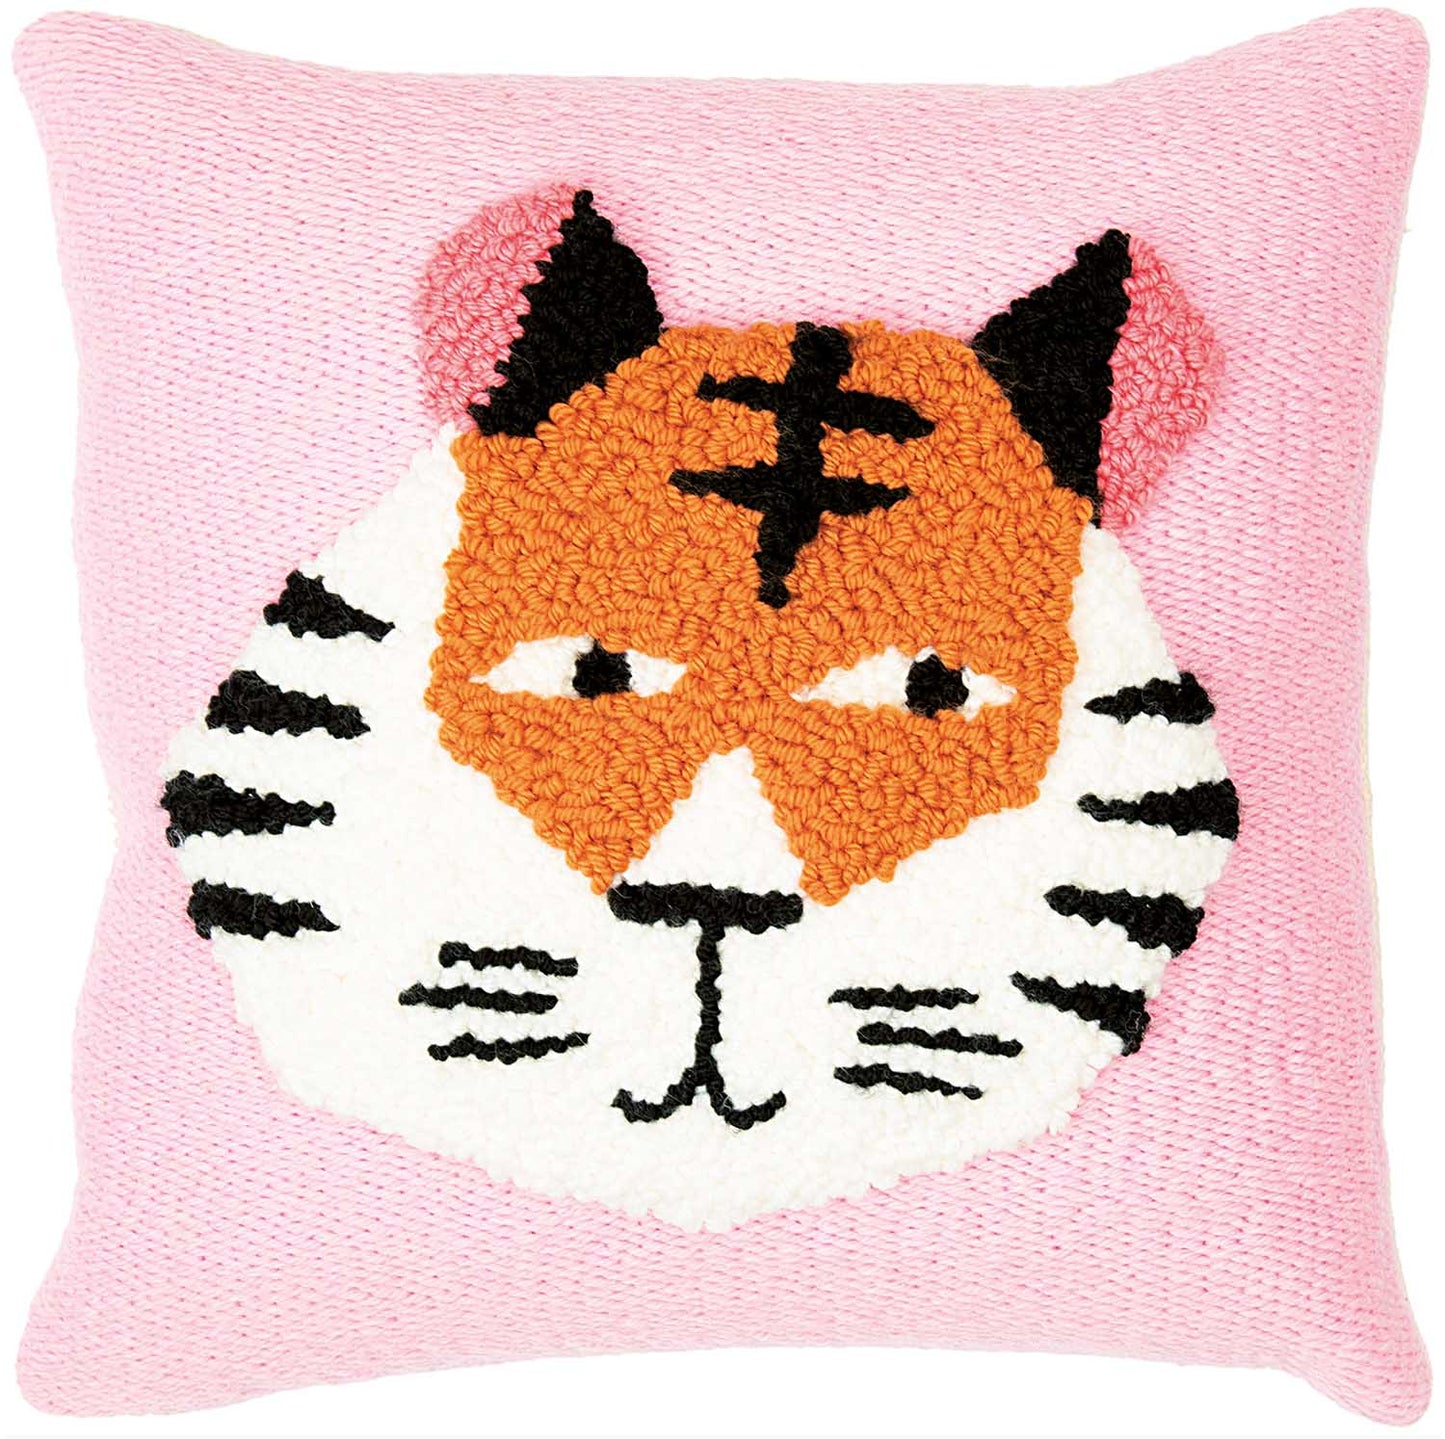 Tiger Pillow Punch Needle Kit - homesewn